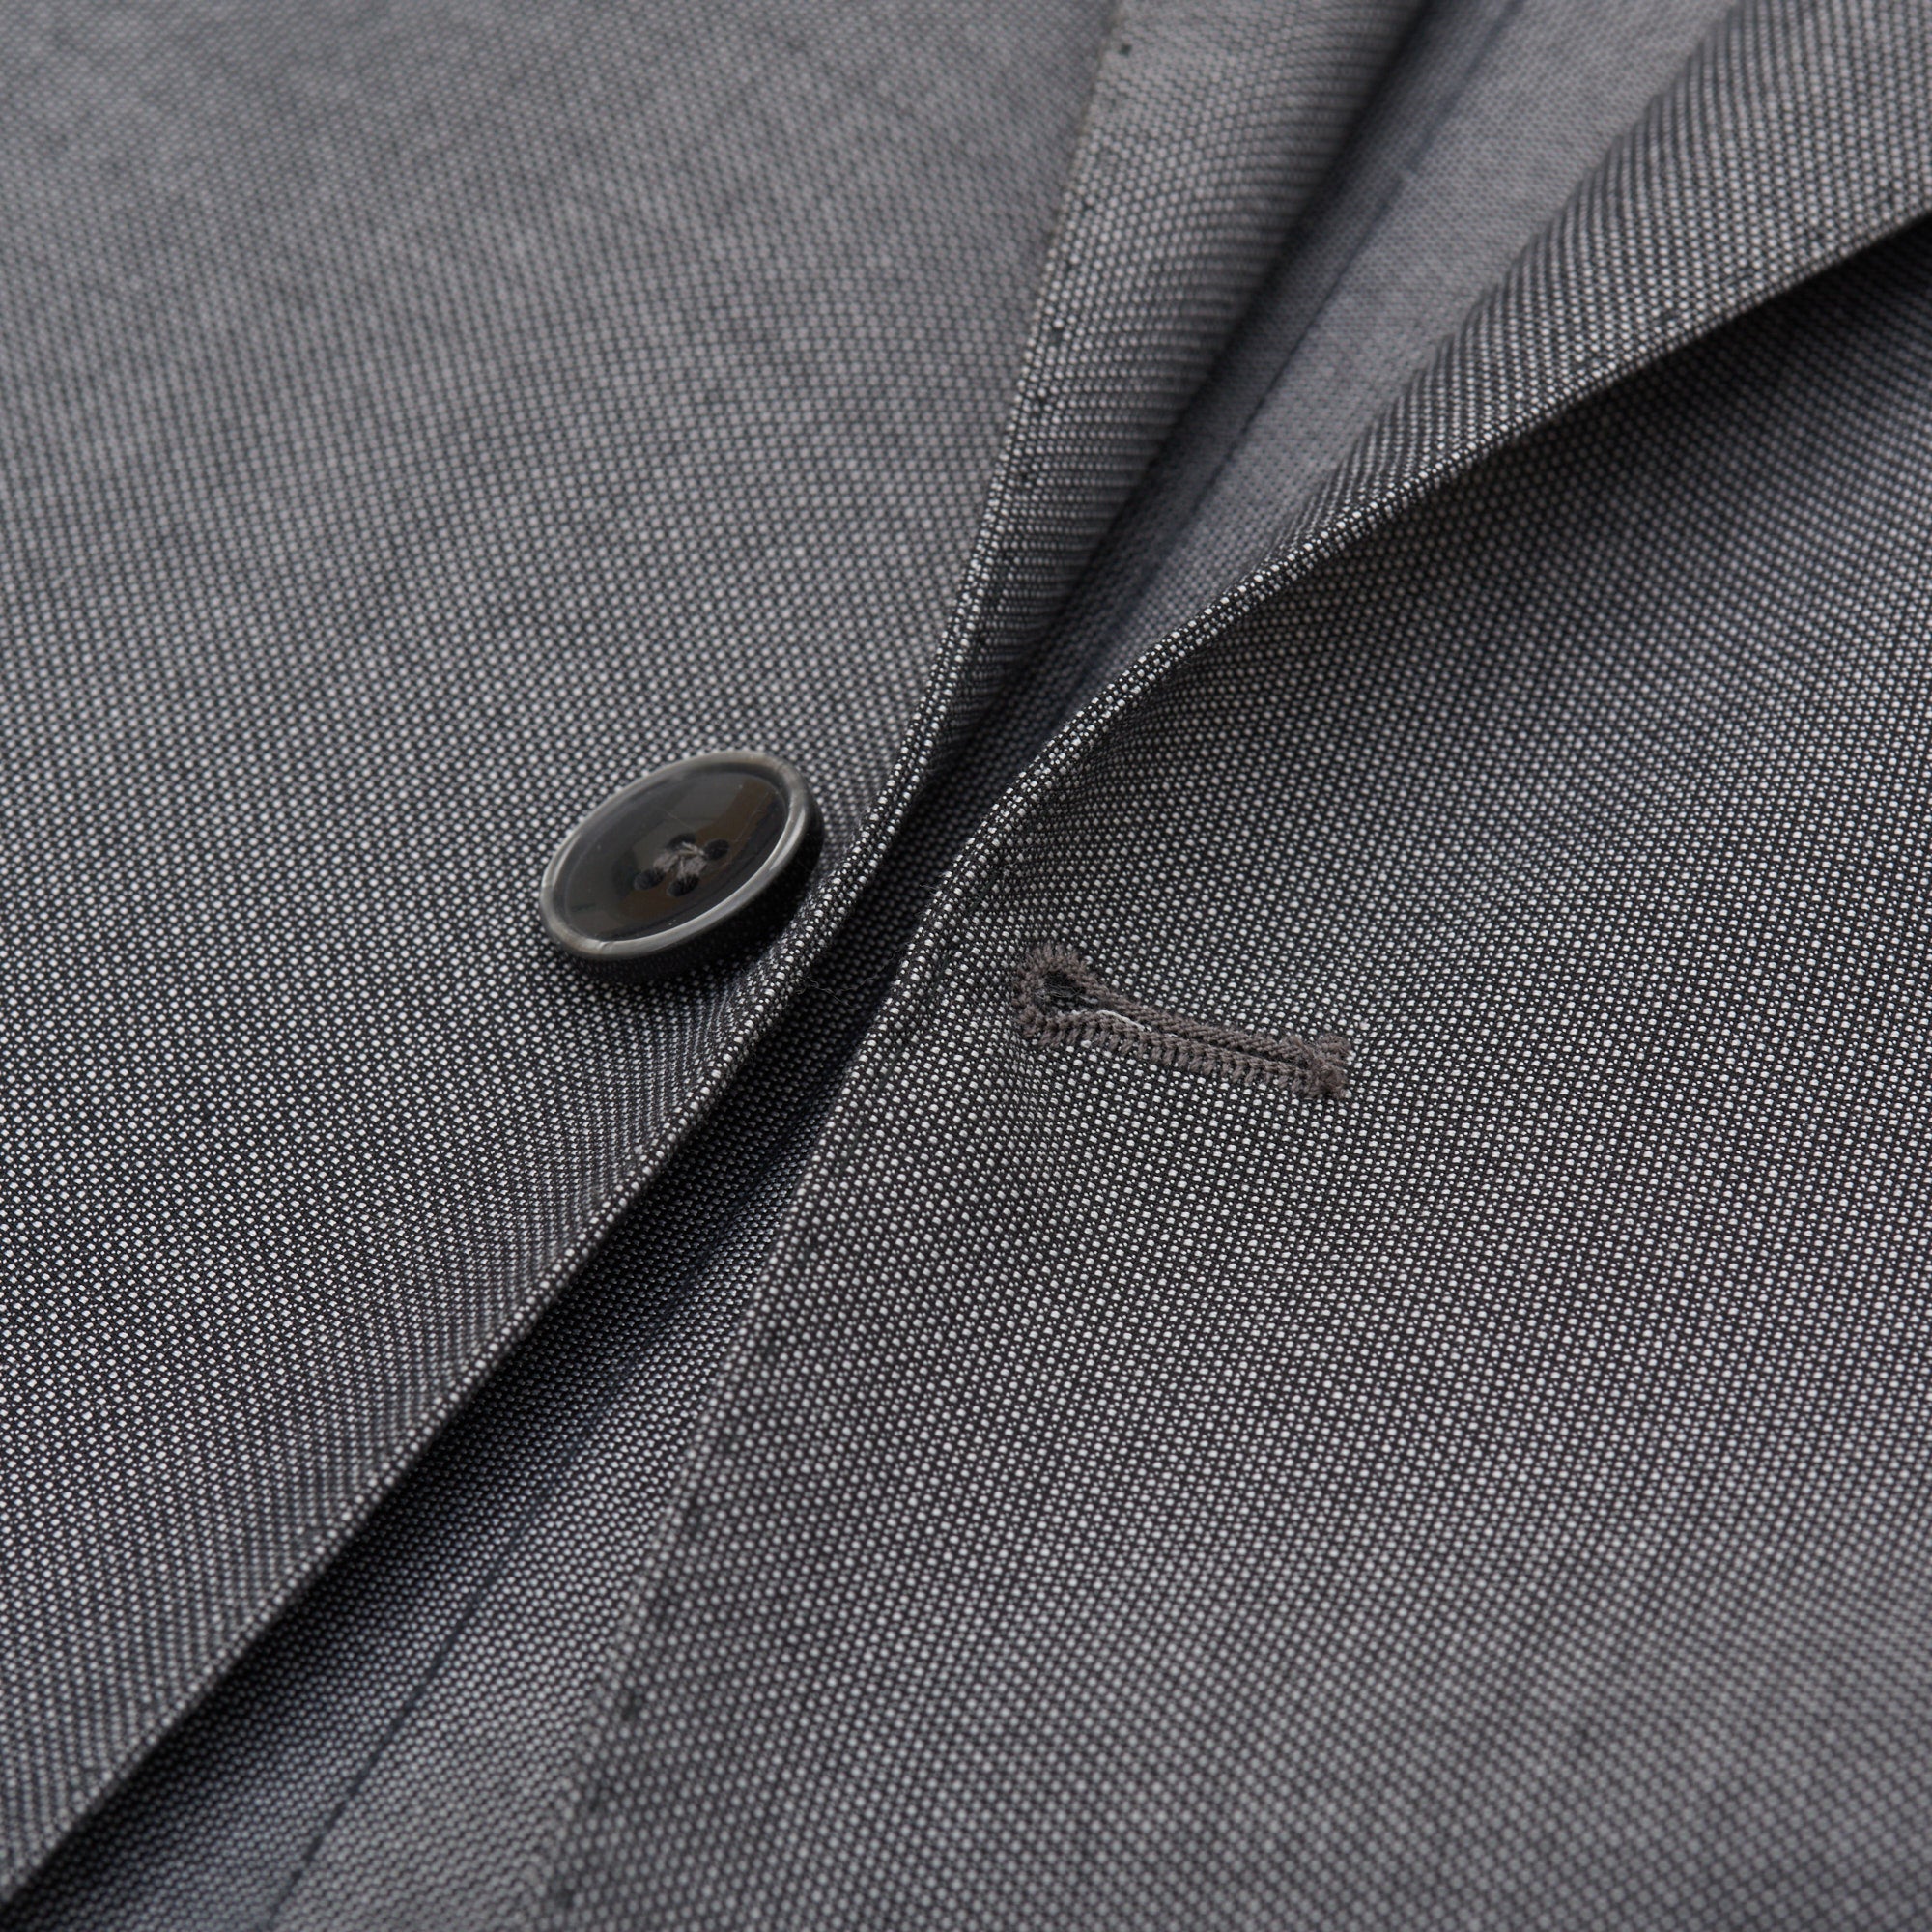 VINCENZO PALUMBO Napoli Gray Patterned Wool Business Suit NEW